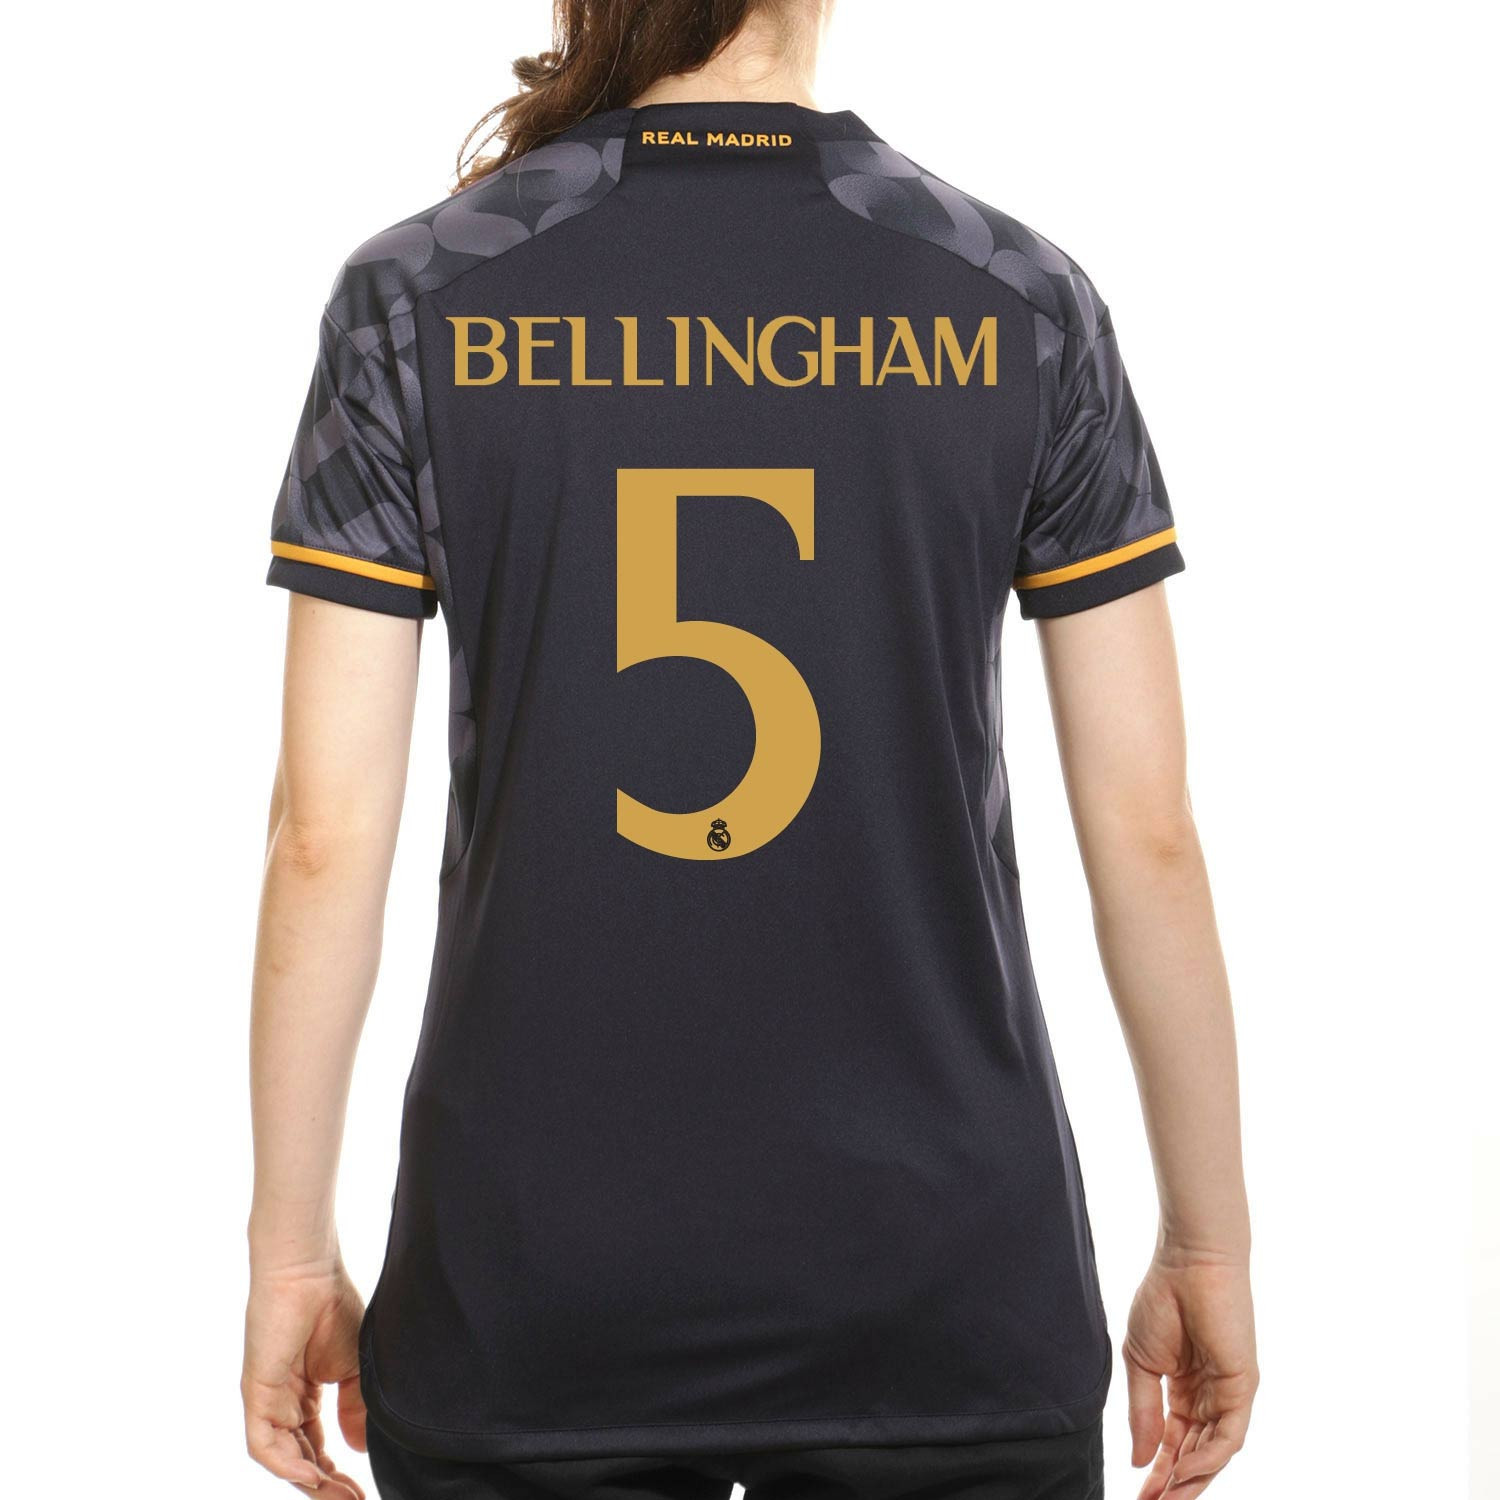 Camiseta adidas 3a Real Madrid Bellingham mujer 2023 2024 negra